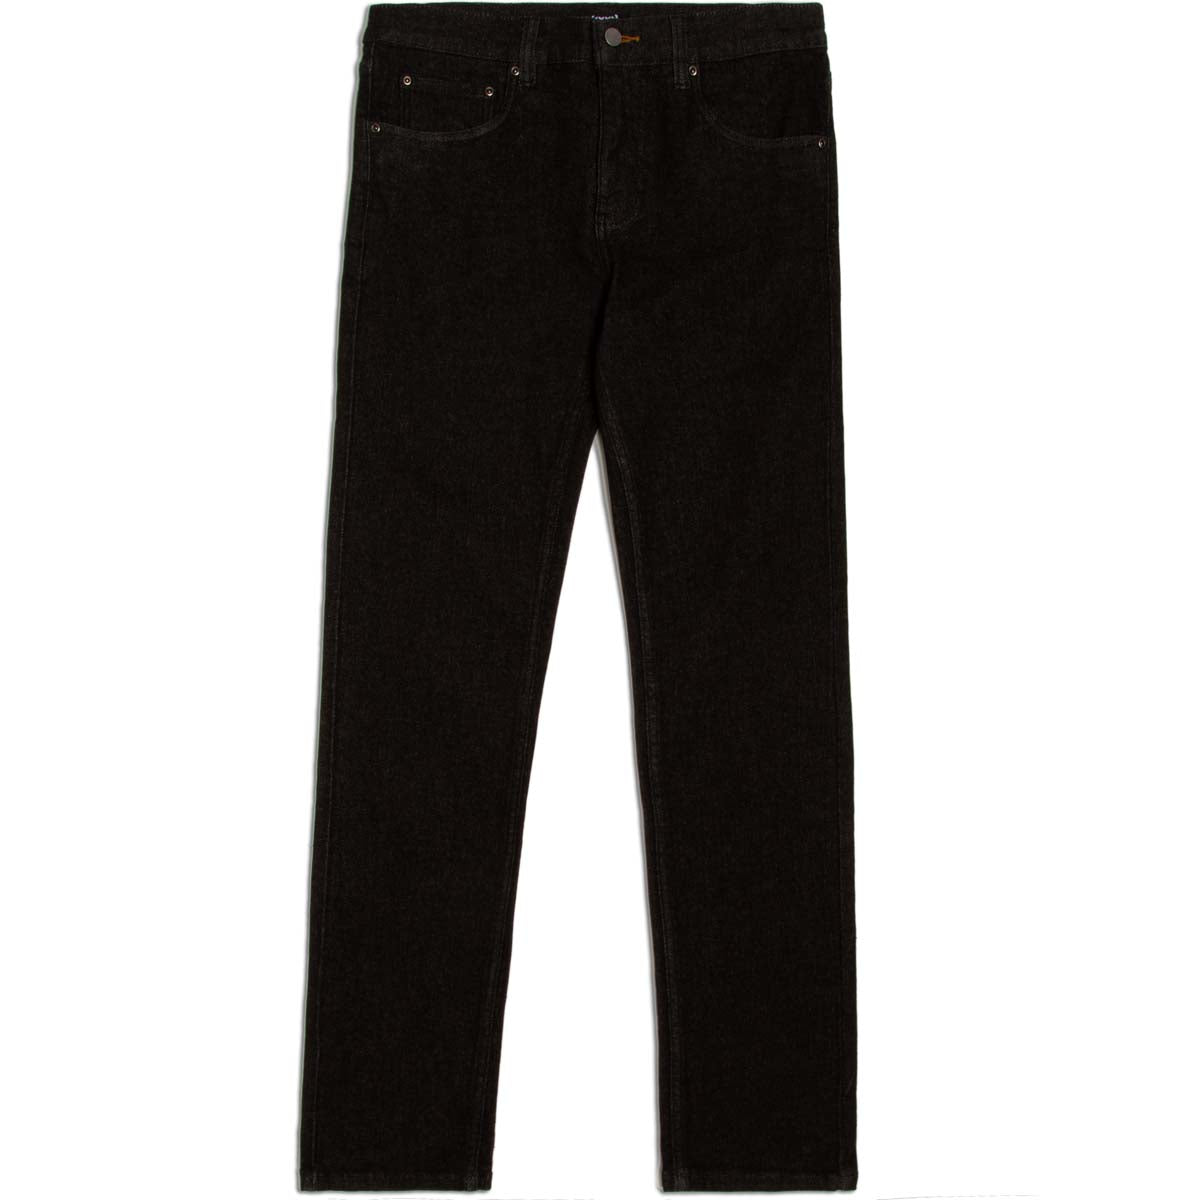 CCS 12oz Stretch Skinny Denim Jeans - 12oz Black image 5